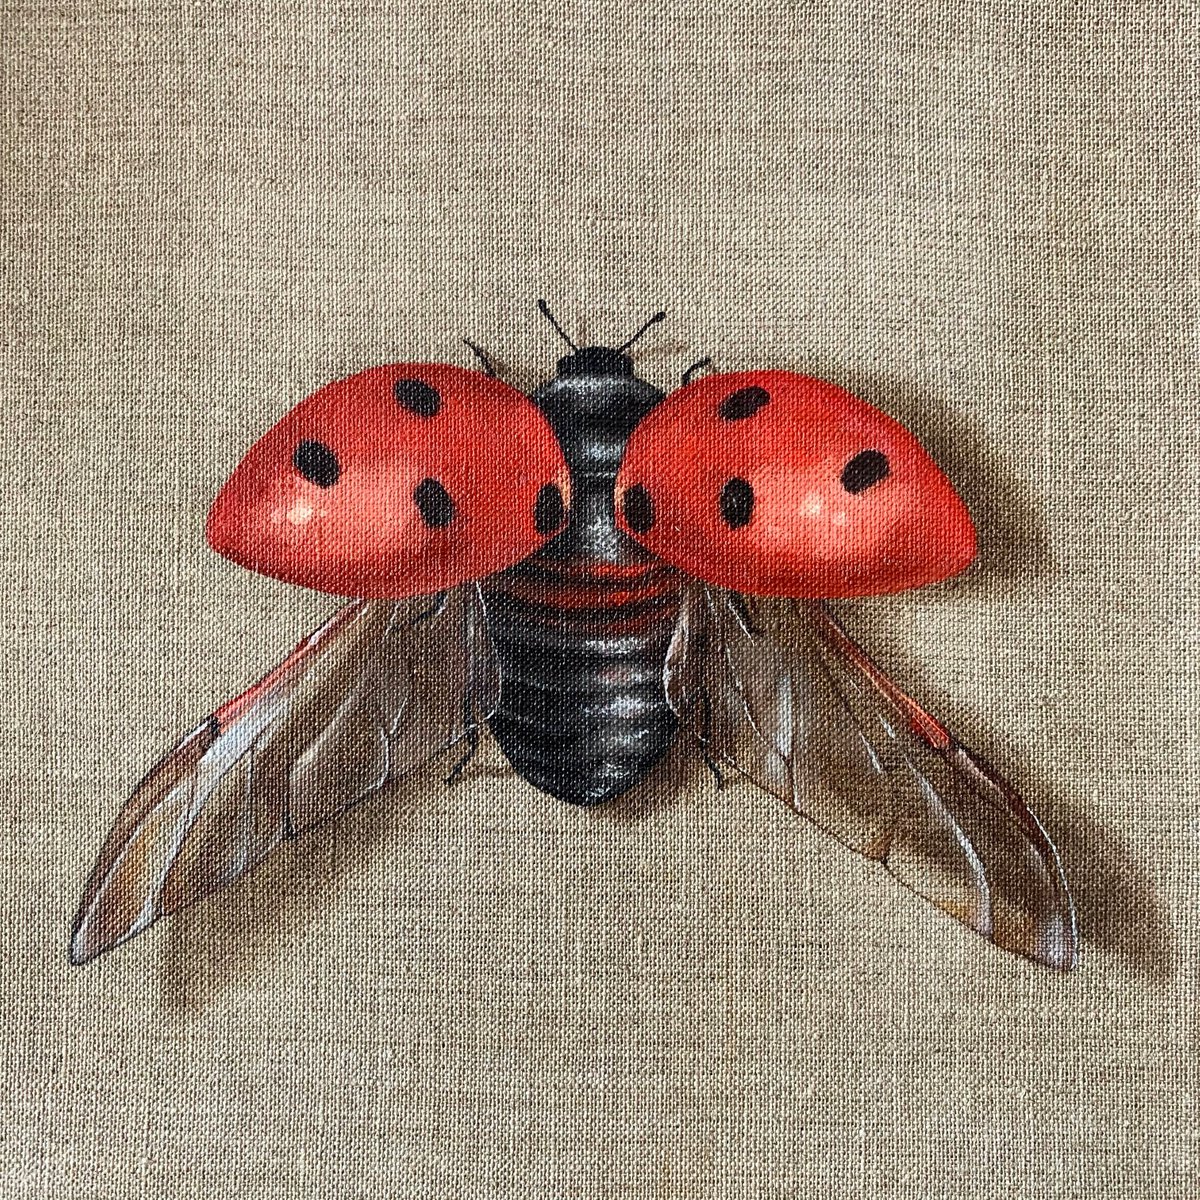 -Impermanent life-? #3 Ladybug by Alina Marsovna